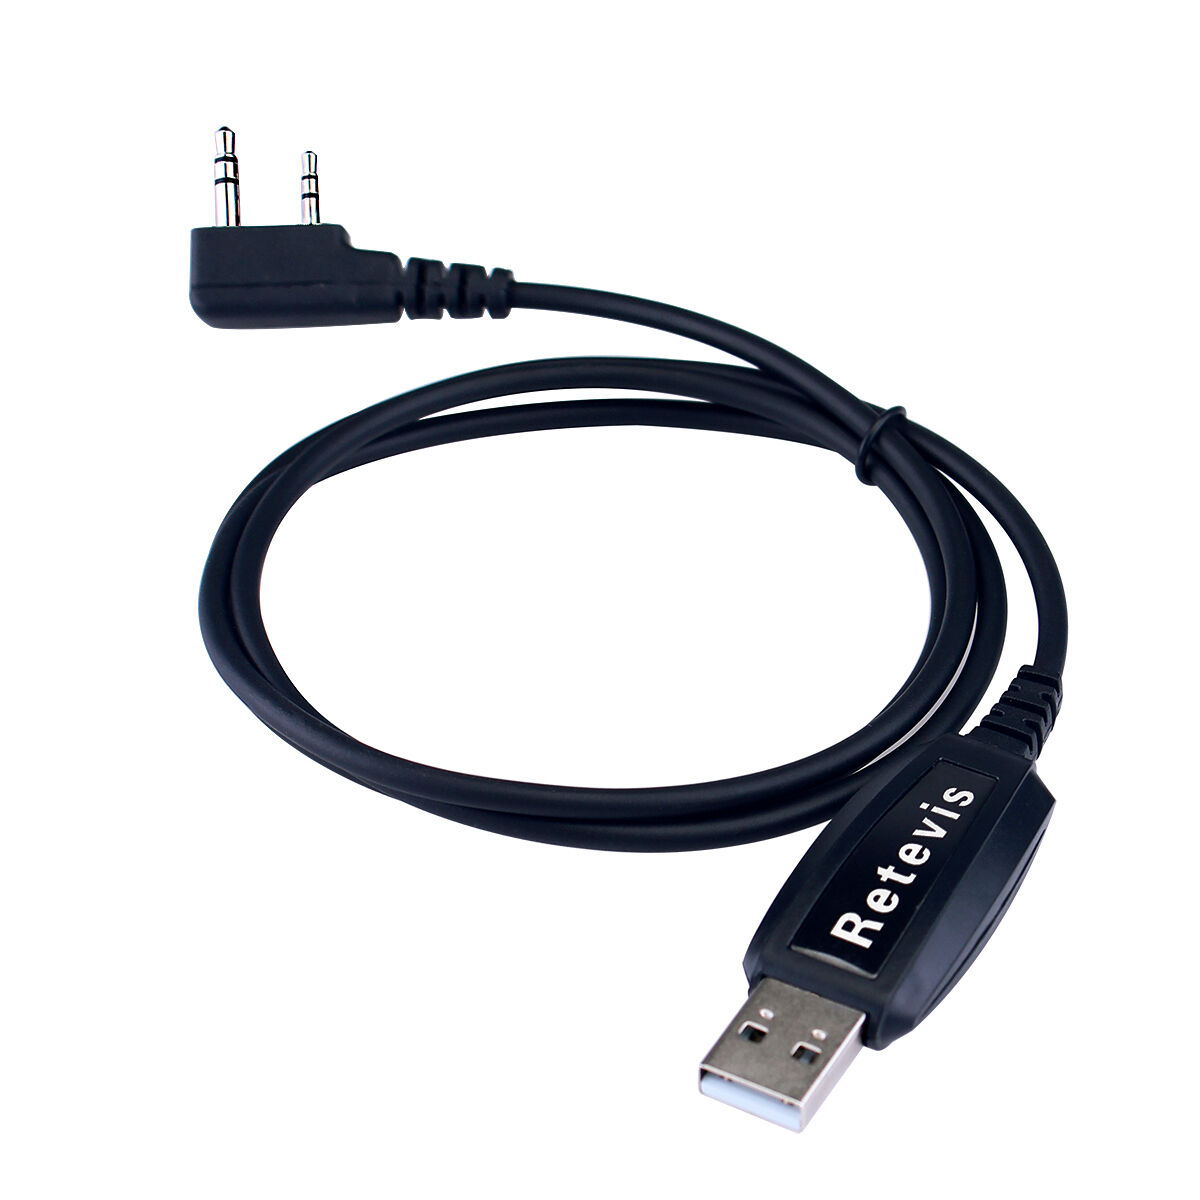 Original USB Programming Cable for Retevis RT3 RT8